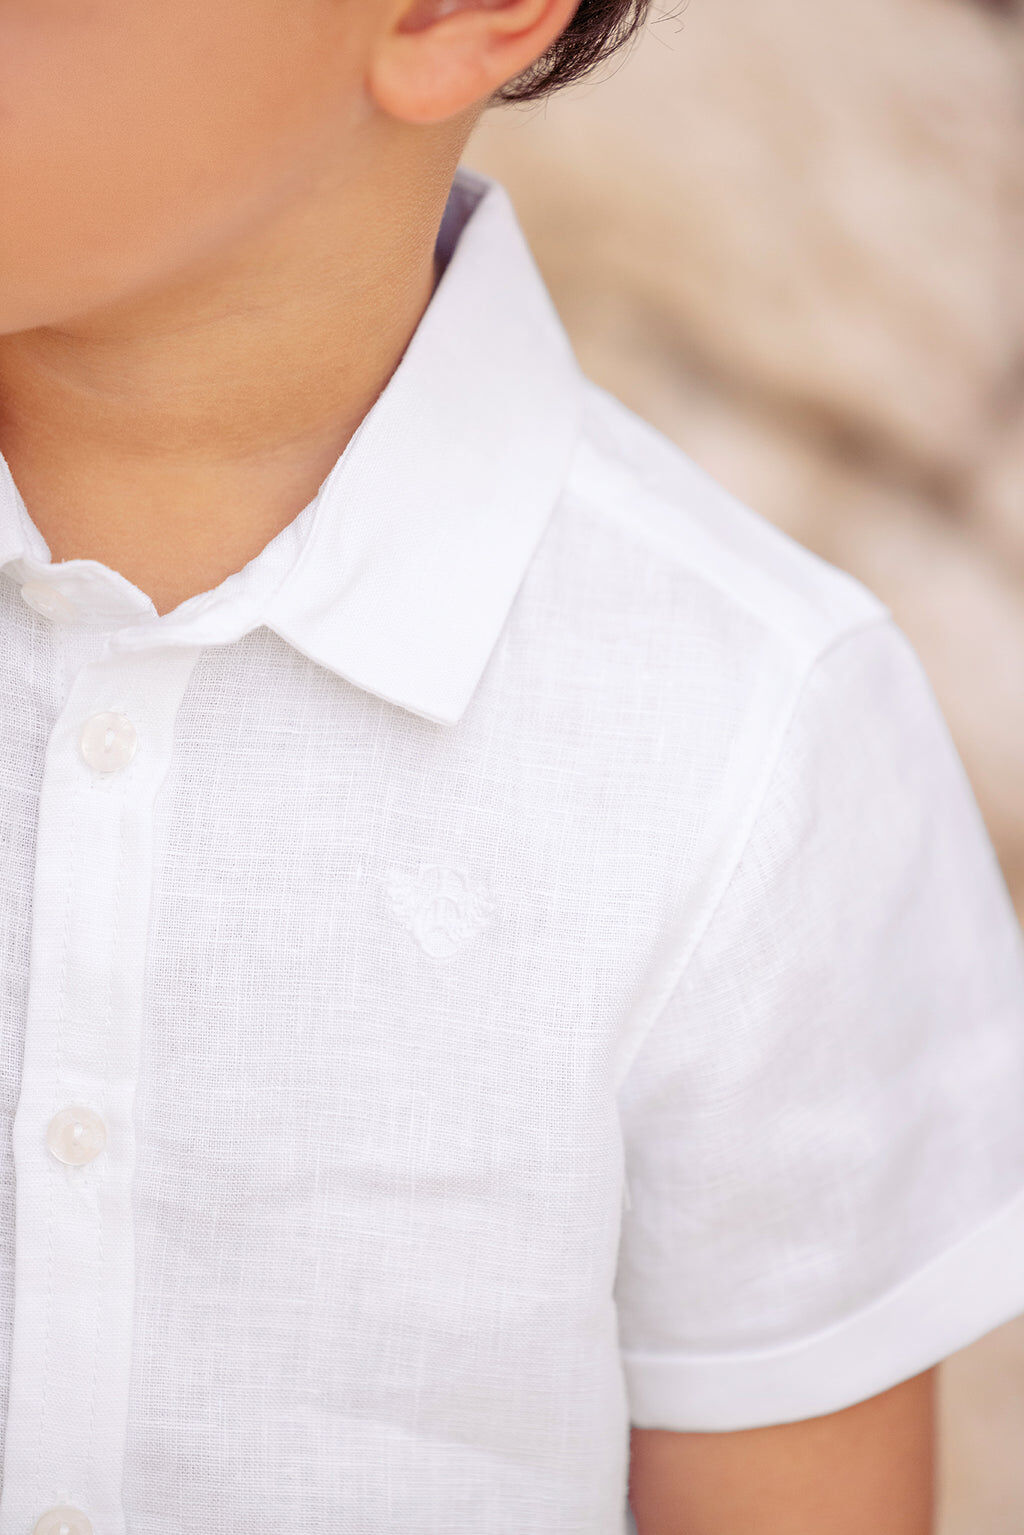 Shirt - White short sleeves